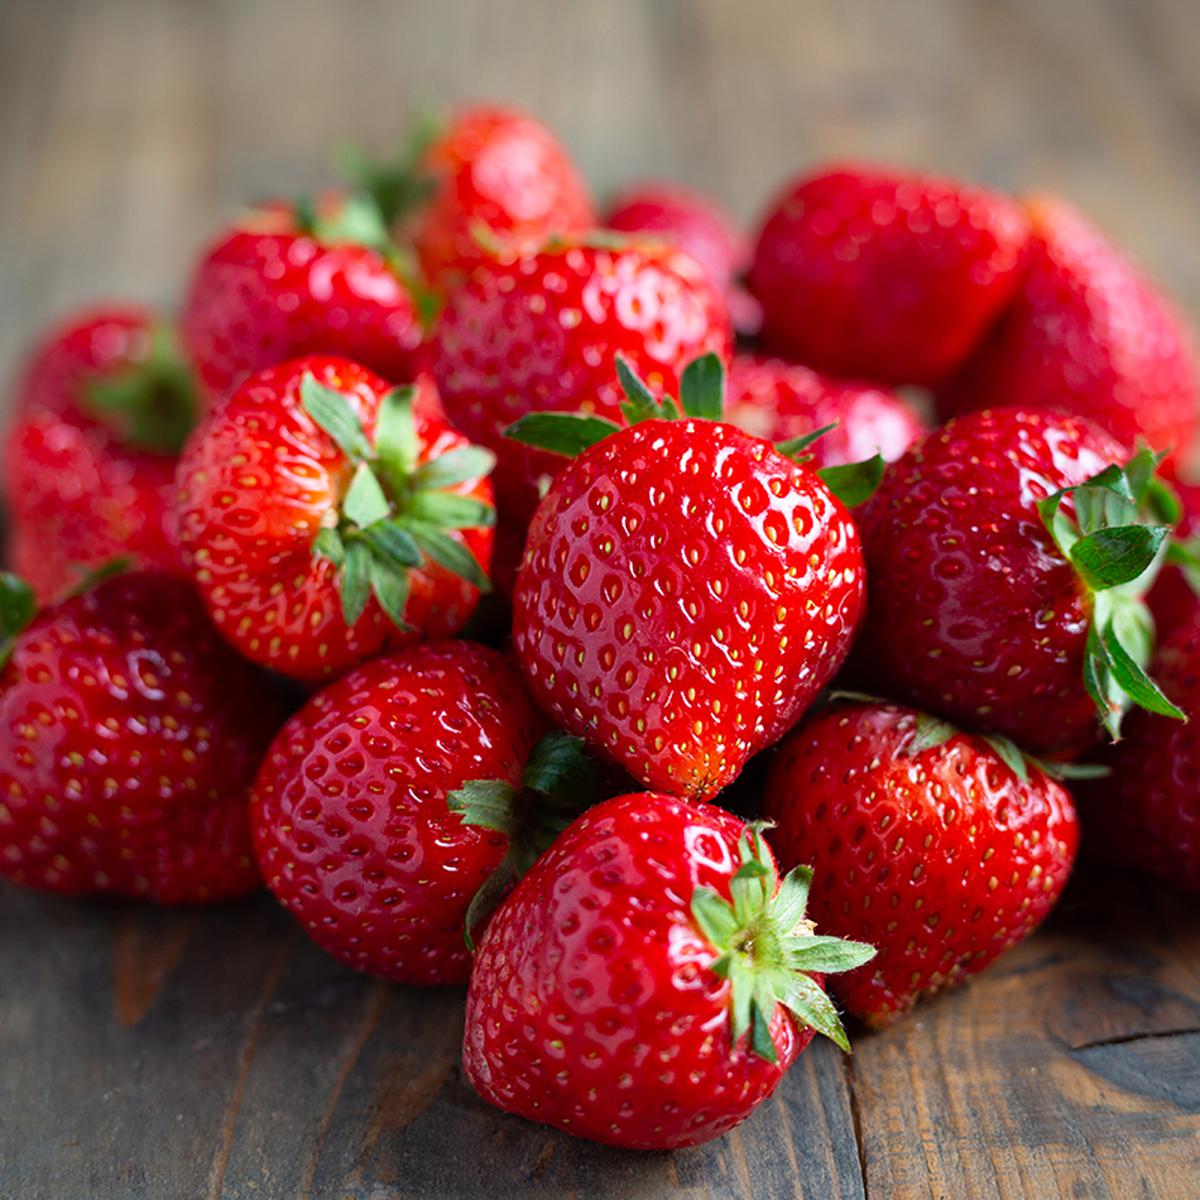 CONSERVAR LAS FRESAS FRESCAS mas tiempo.. Keep strawberries fresh. 